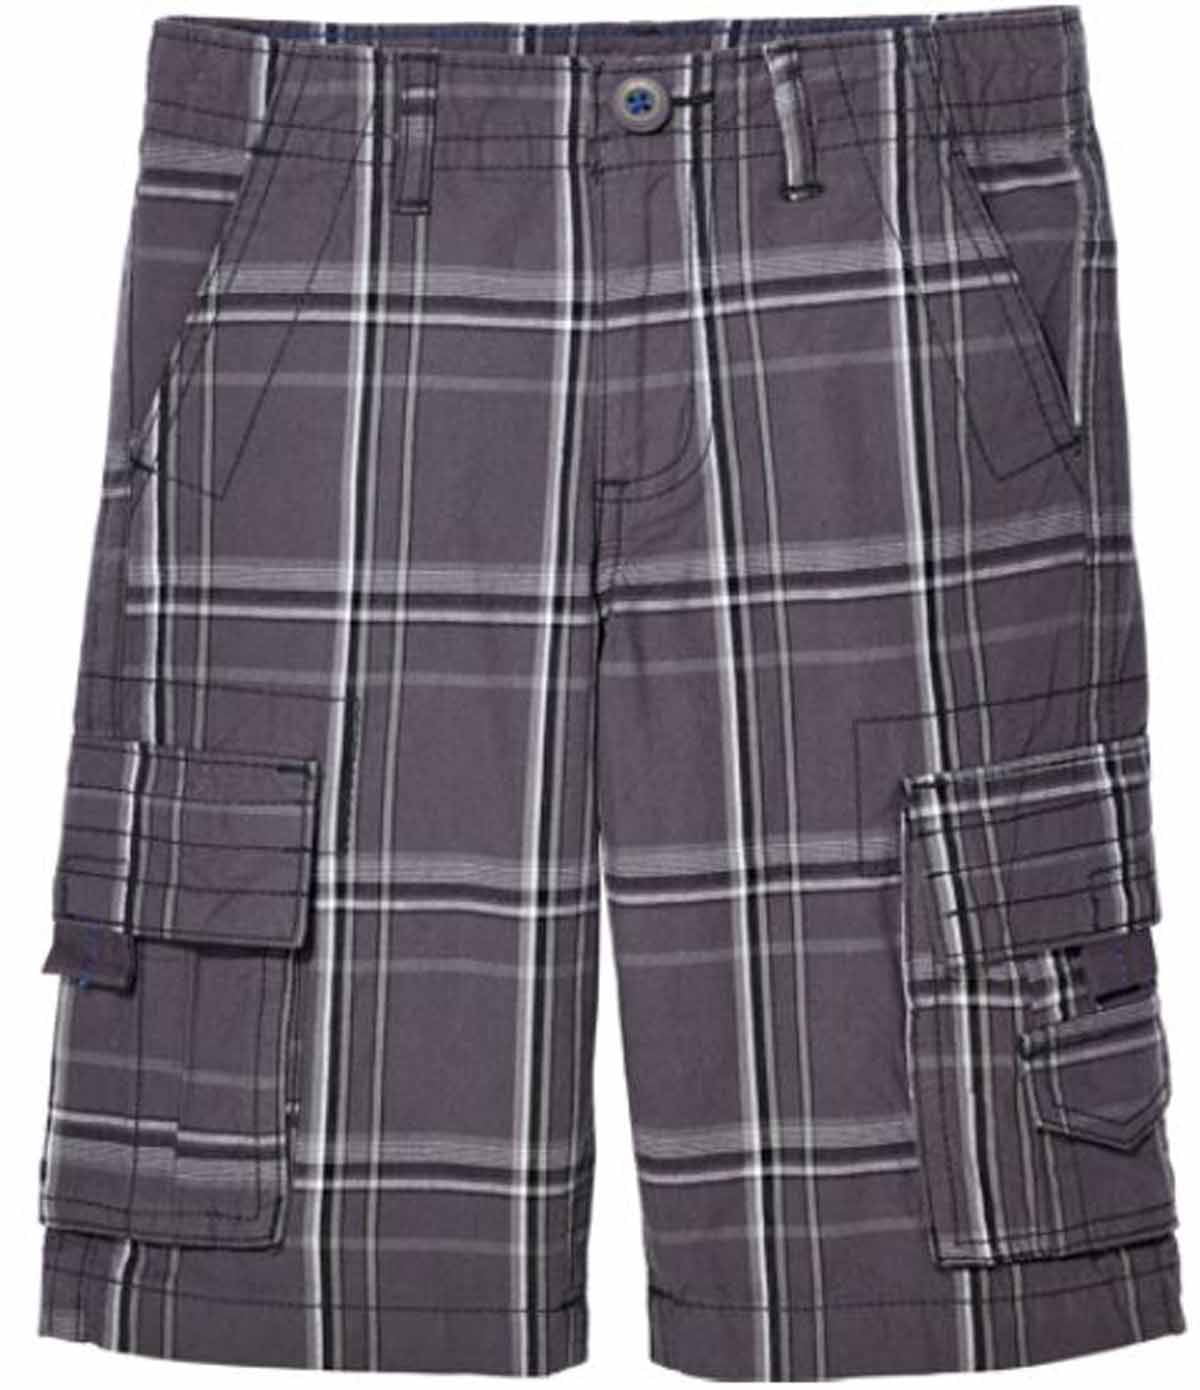 Generra Shorts Boys Cargo Shorts Adjustable Waistband (Gray Plaid, 6 ...